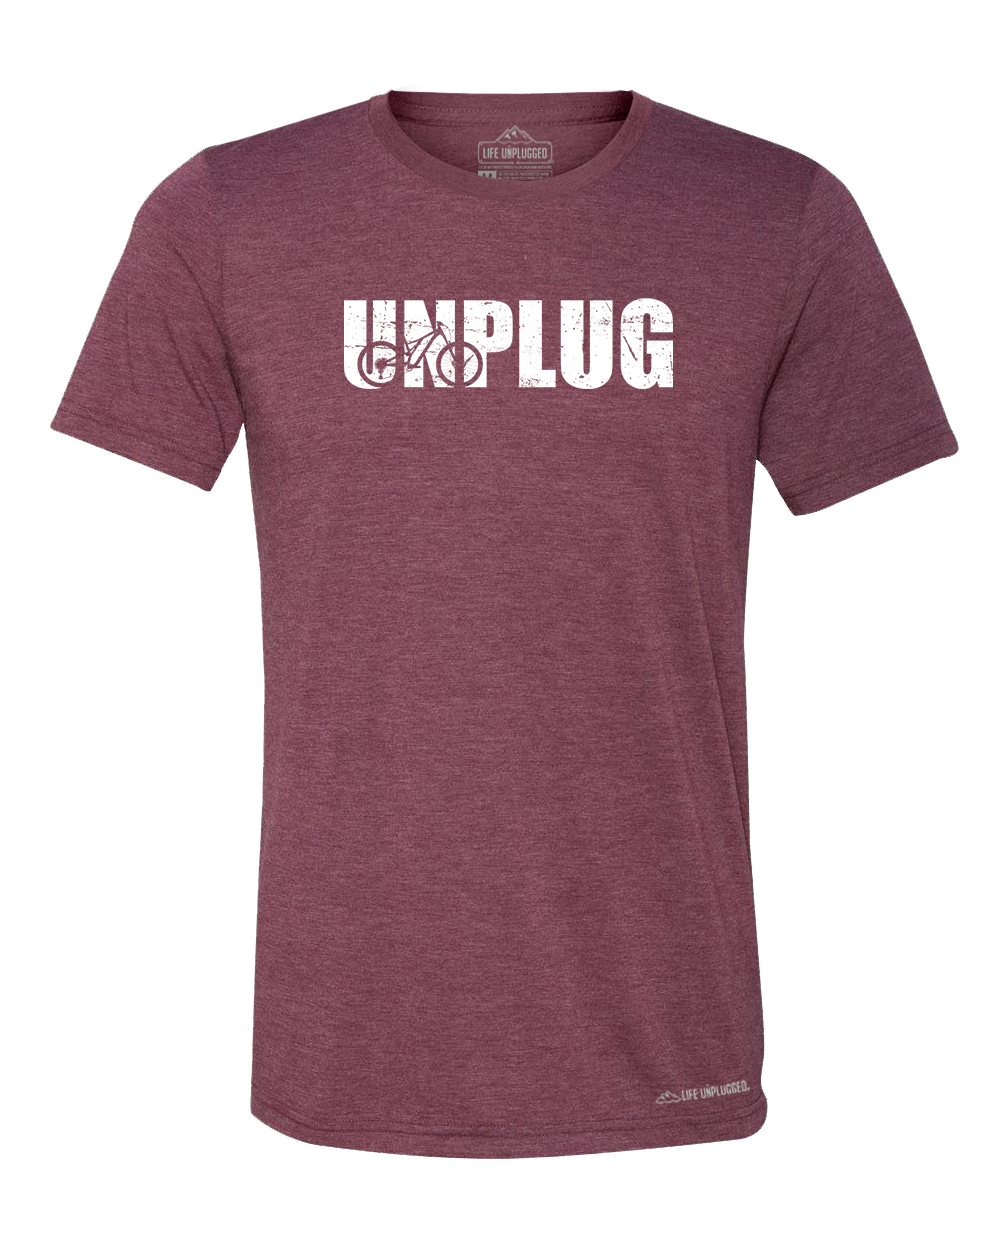 Unplug Mountain Bike Silhouette Premium Triblend T-Shirt - Life Unplugged